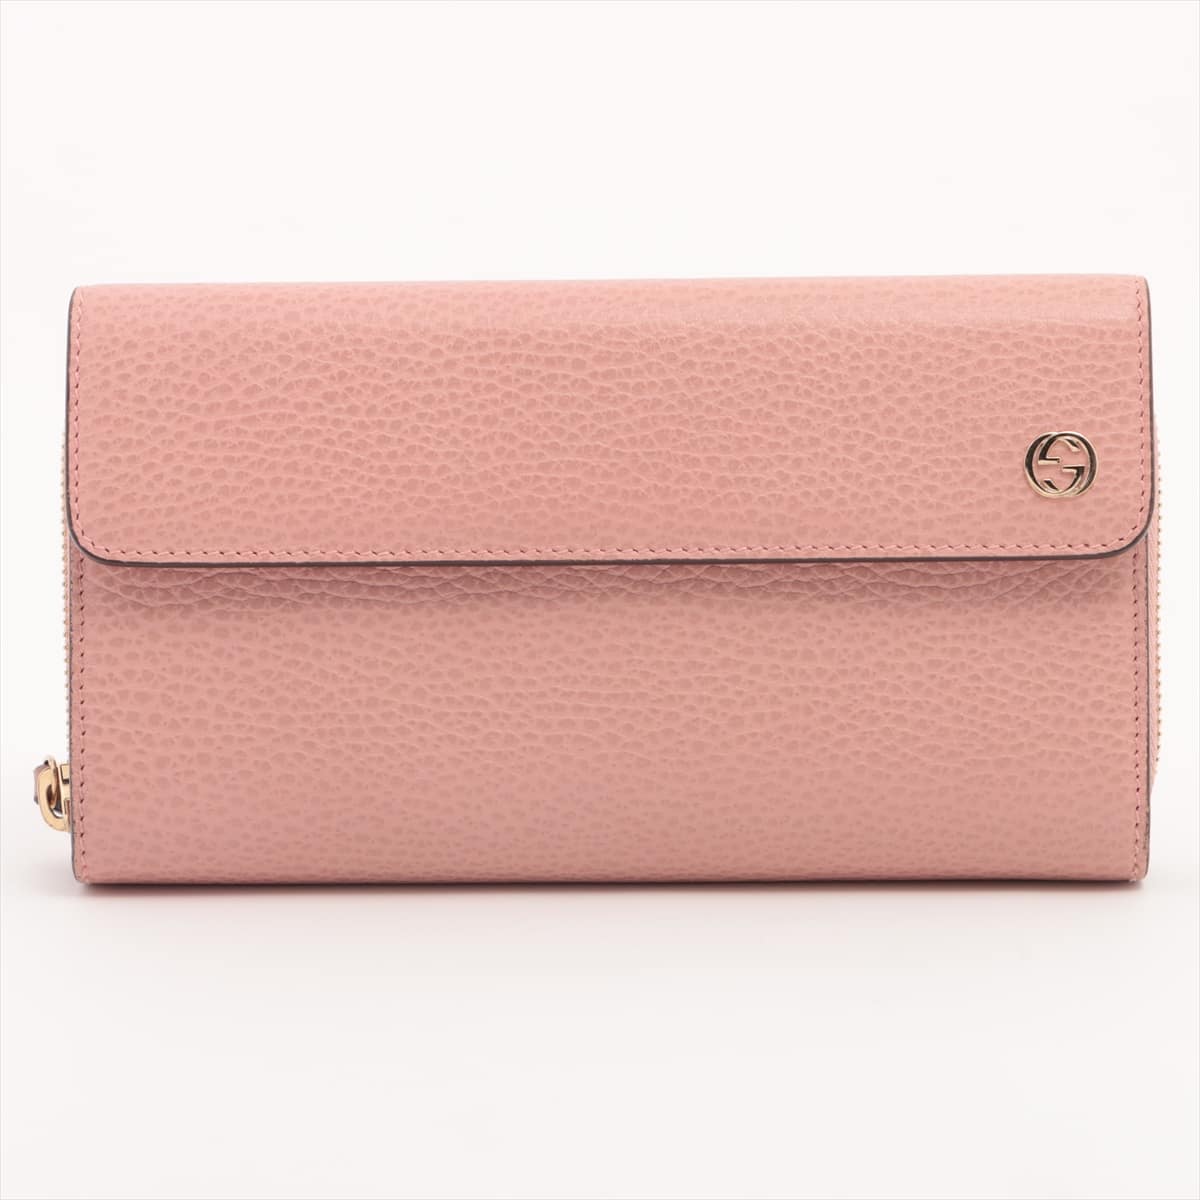 Gucci Interlocking G 449397 Leather Wallet Pink